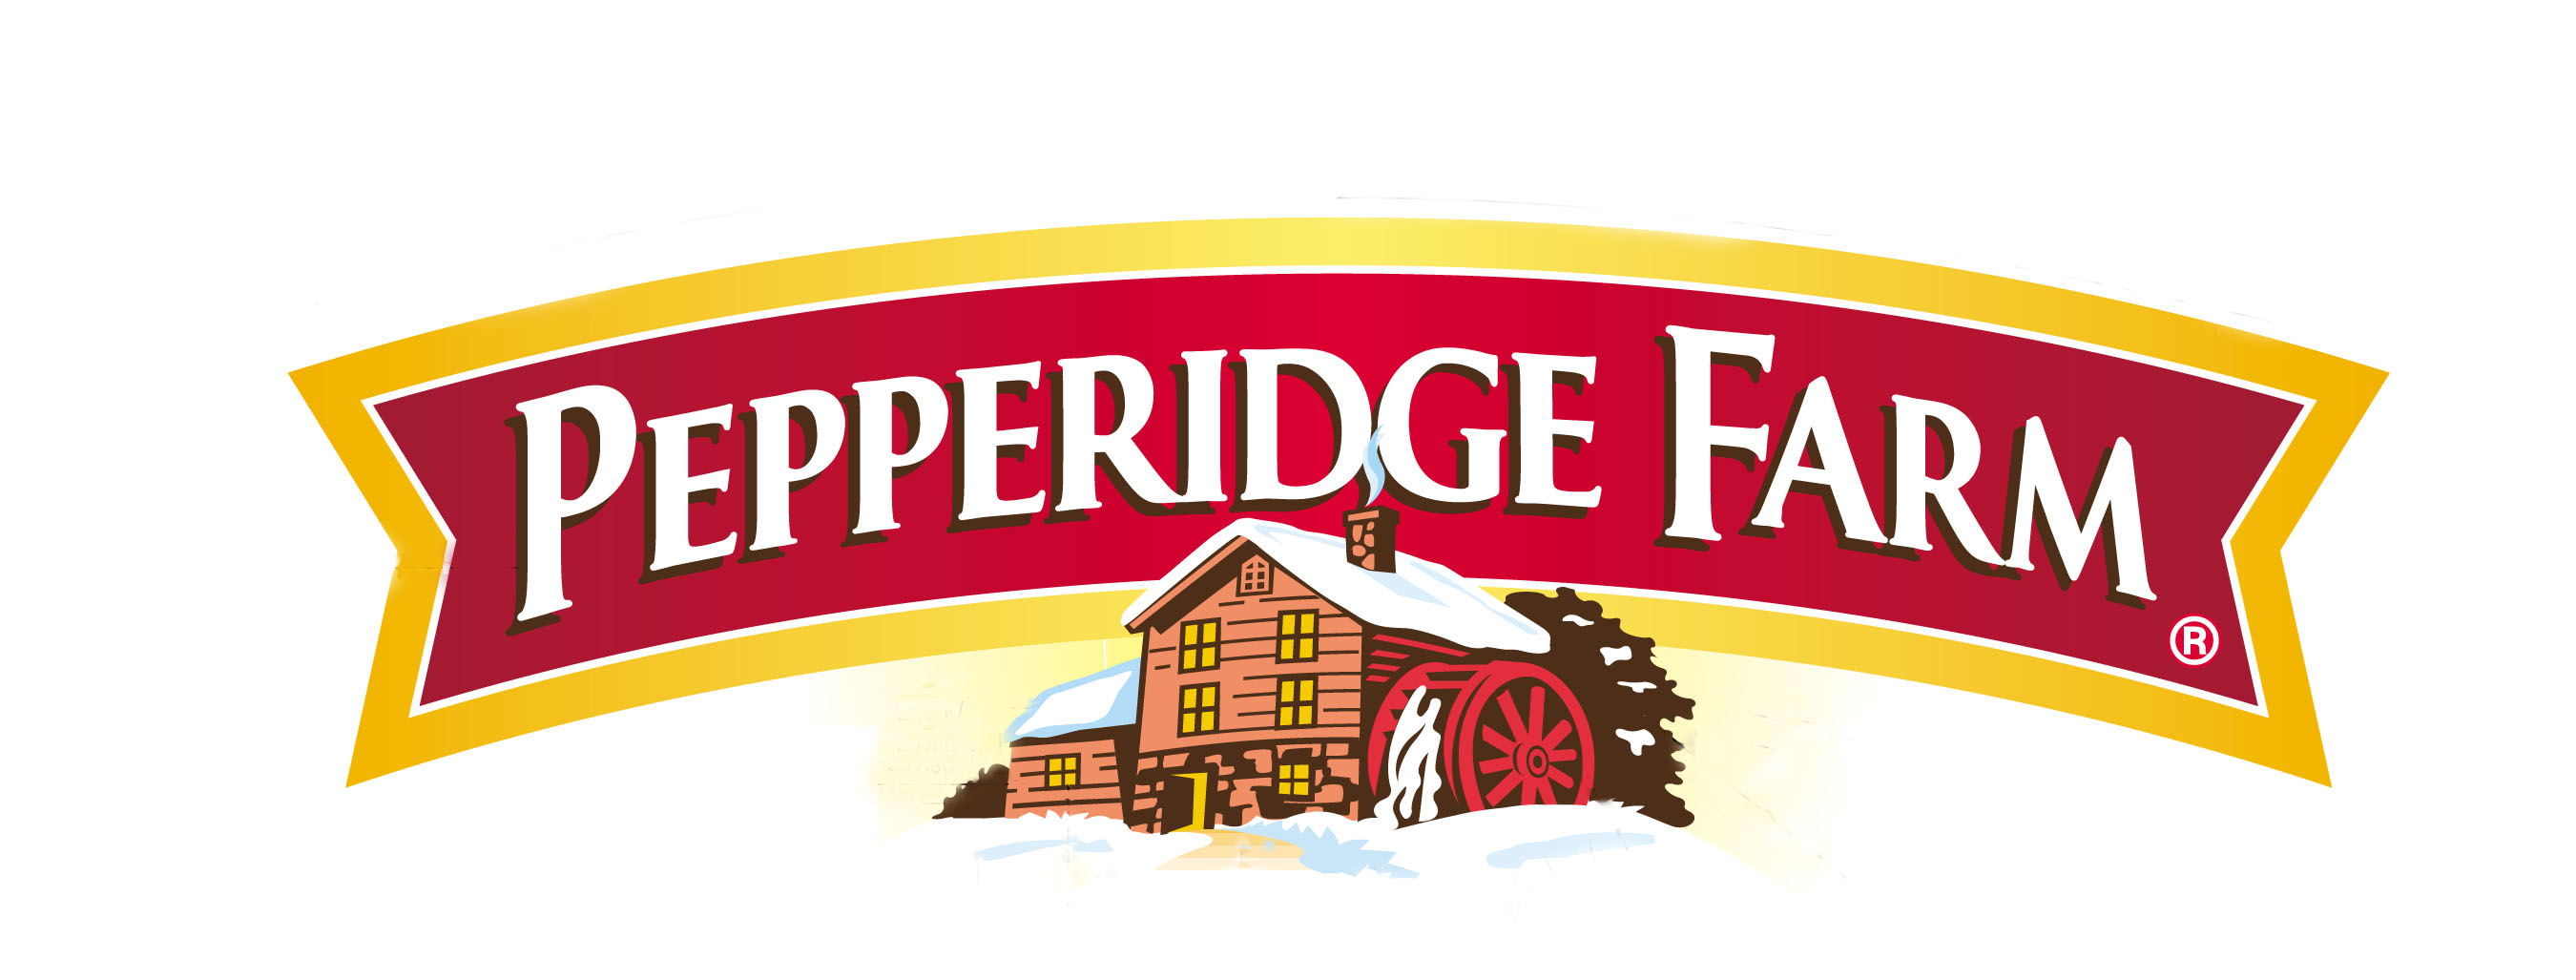 Pepperidge Farm logo.